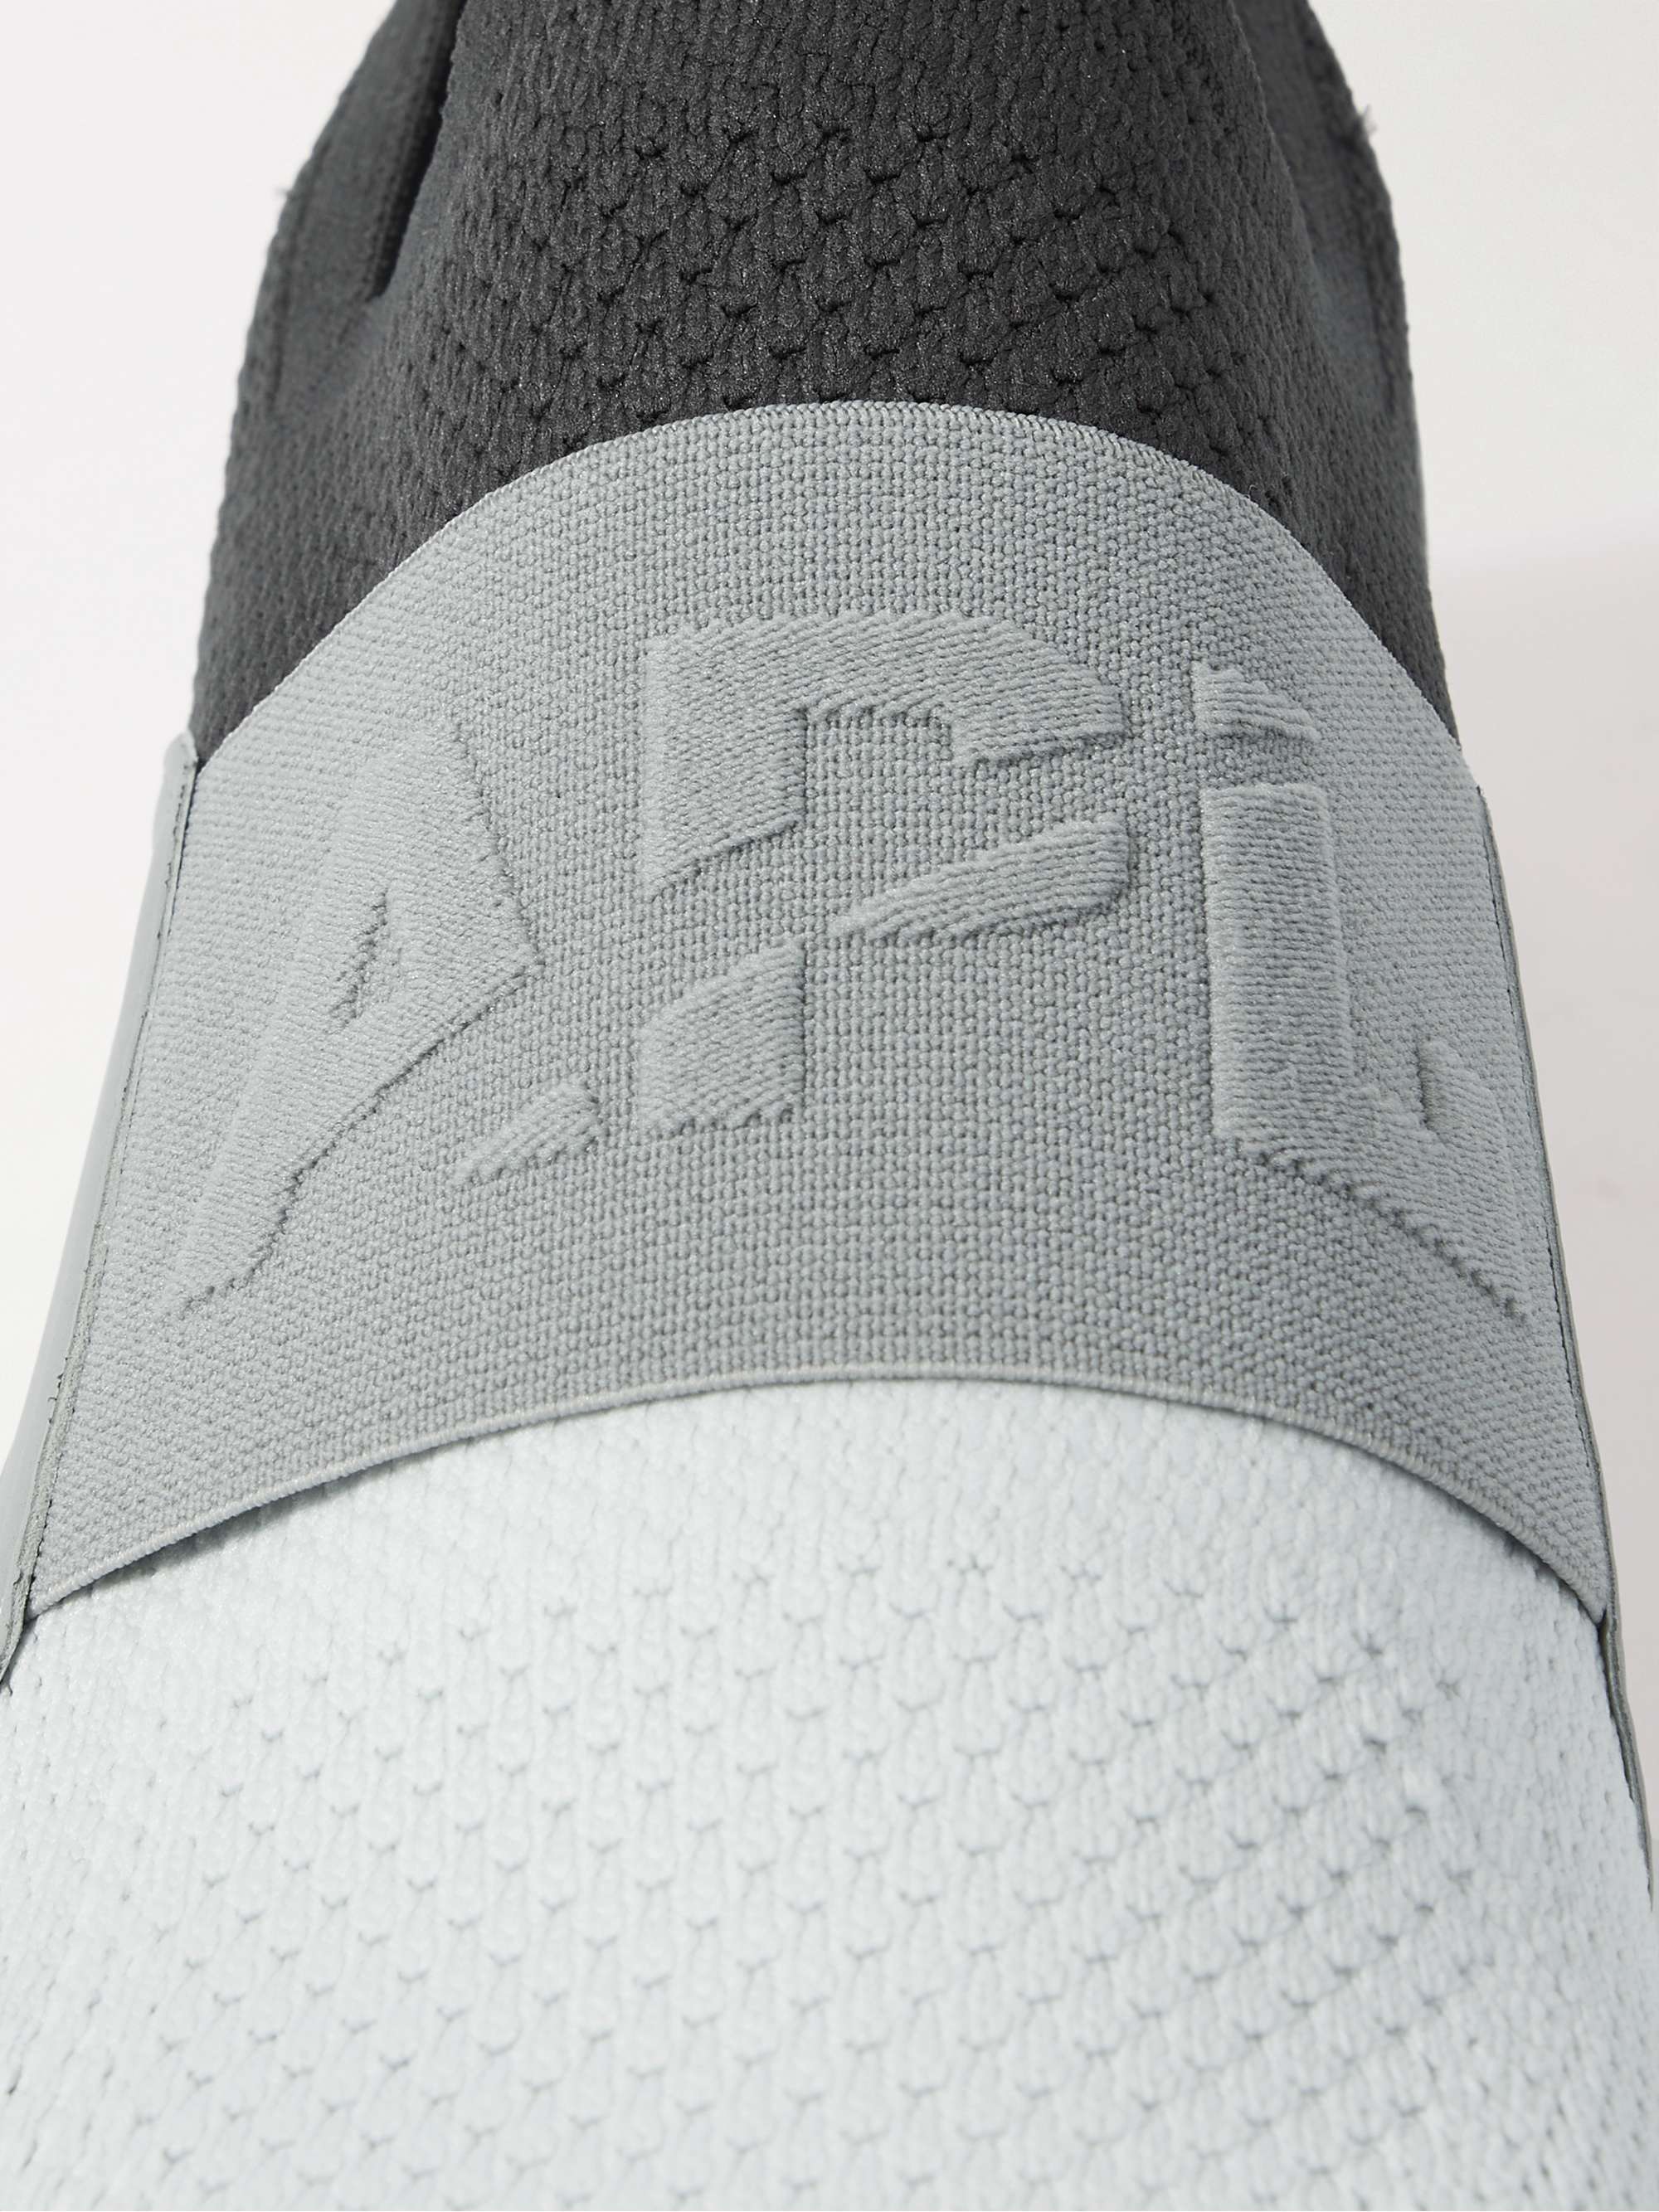 APL ATHLETIC PROPULSION LABS Bliss TechLoom Slip-On Running Sneakers